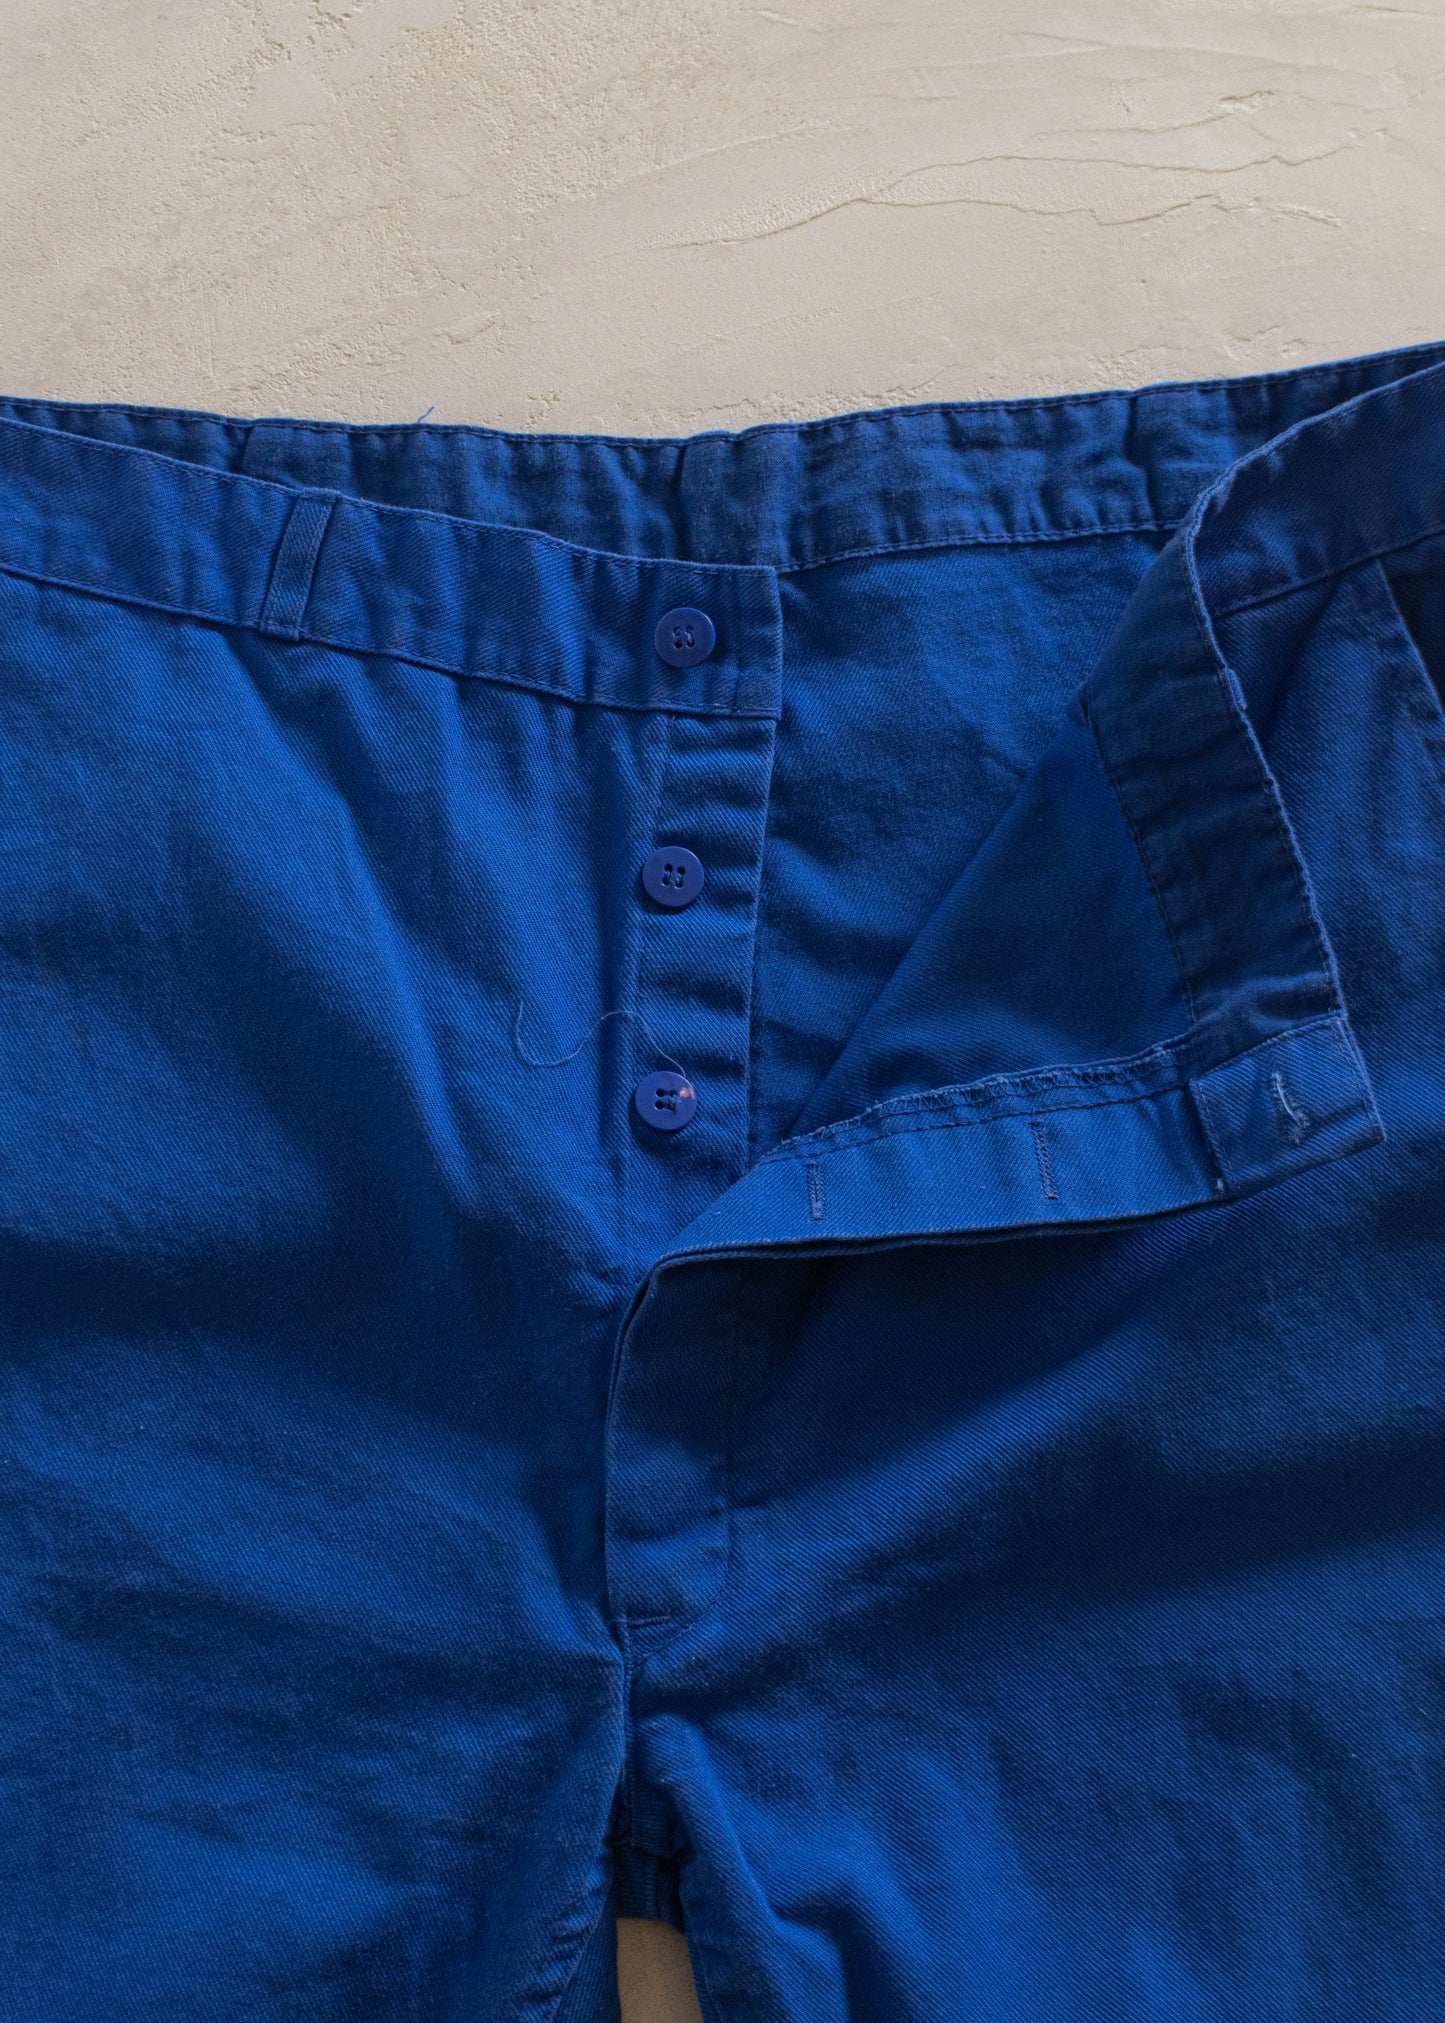 1980s French Workwear Chore Pants Size Women's 36 Men's 38